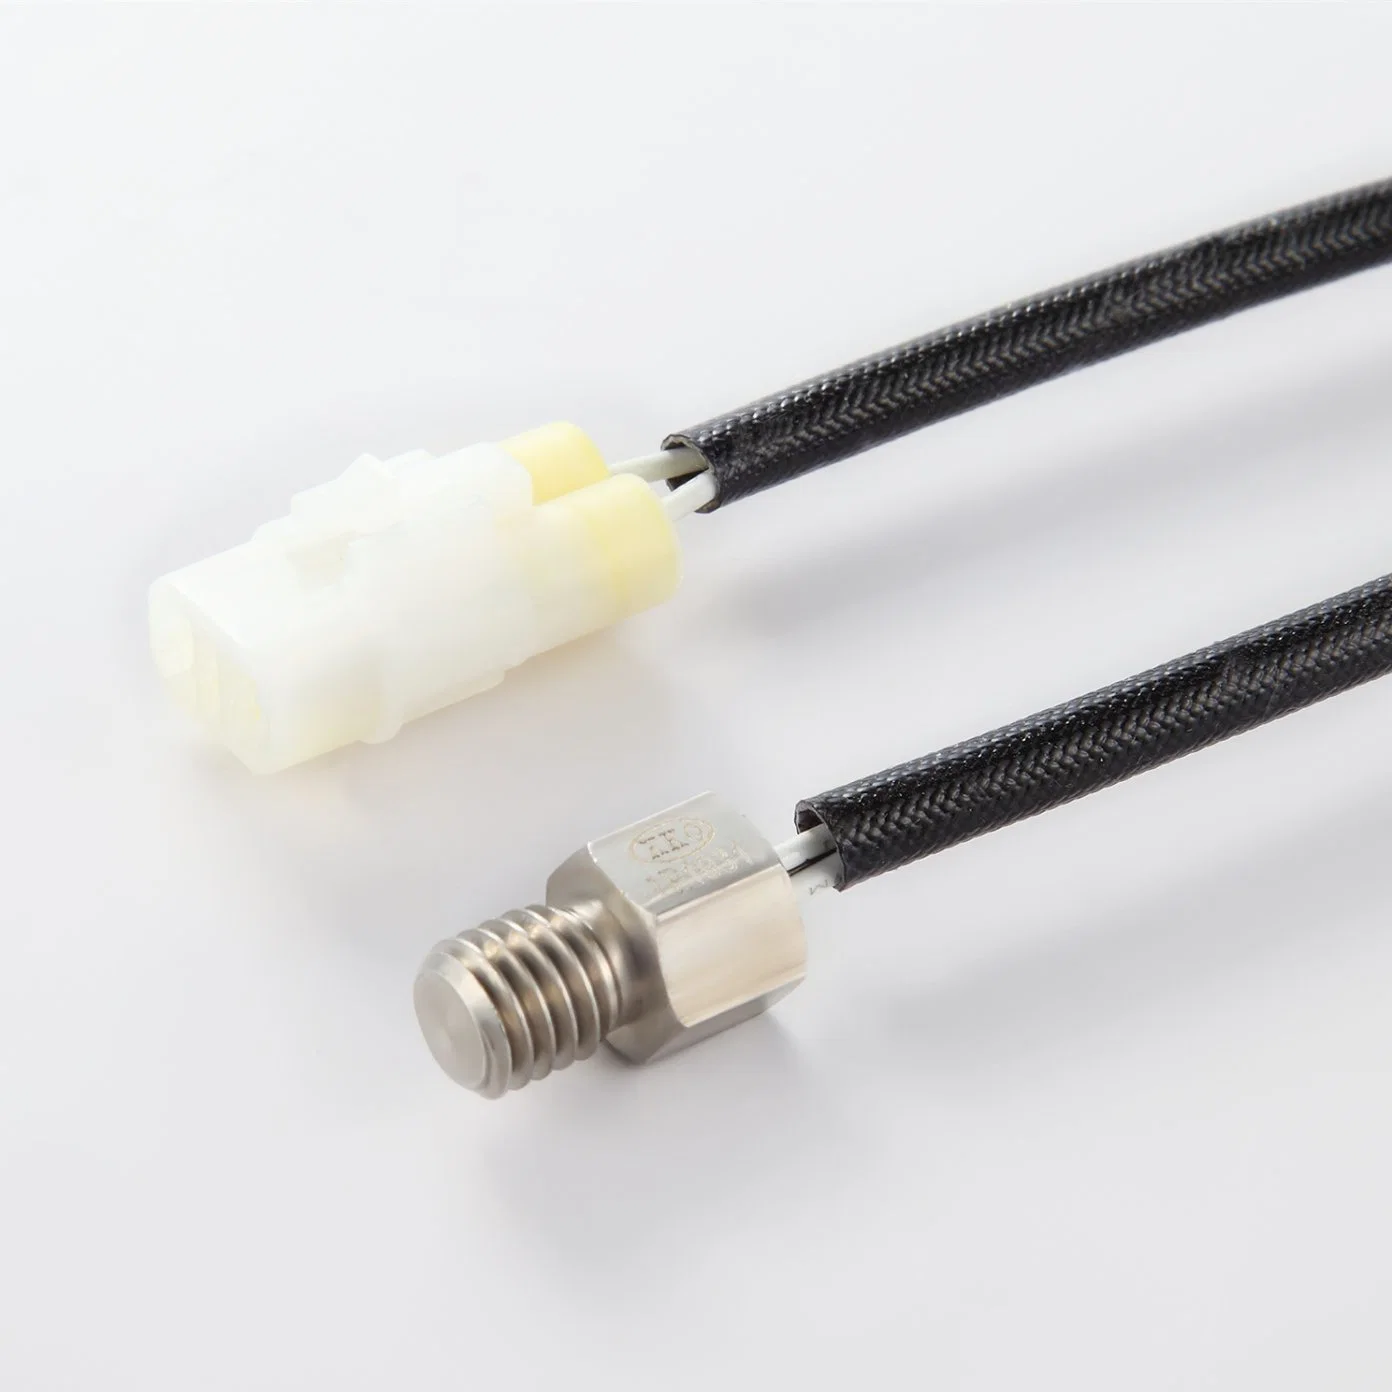 PT1000 M8 Threaded Type Probe Temperature Sensor Thermocouple Waterproof High Precision 3 Wire Cable